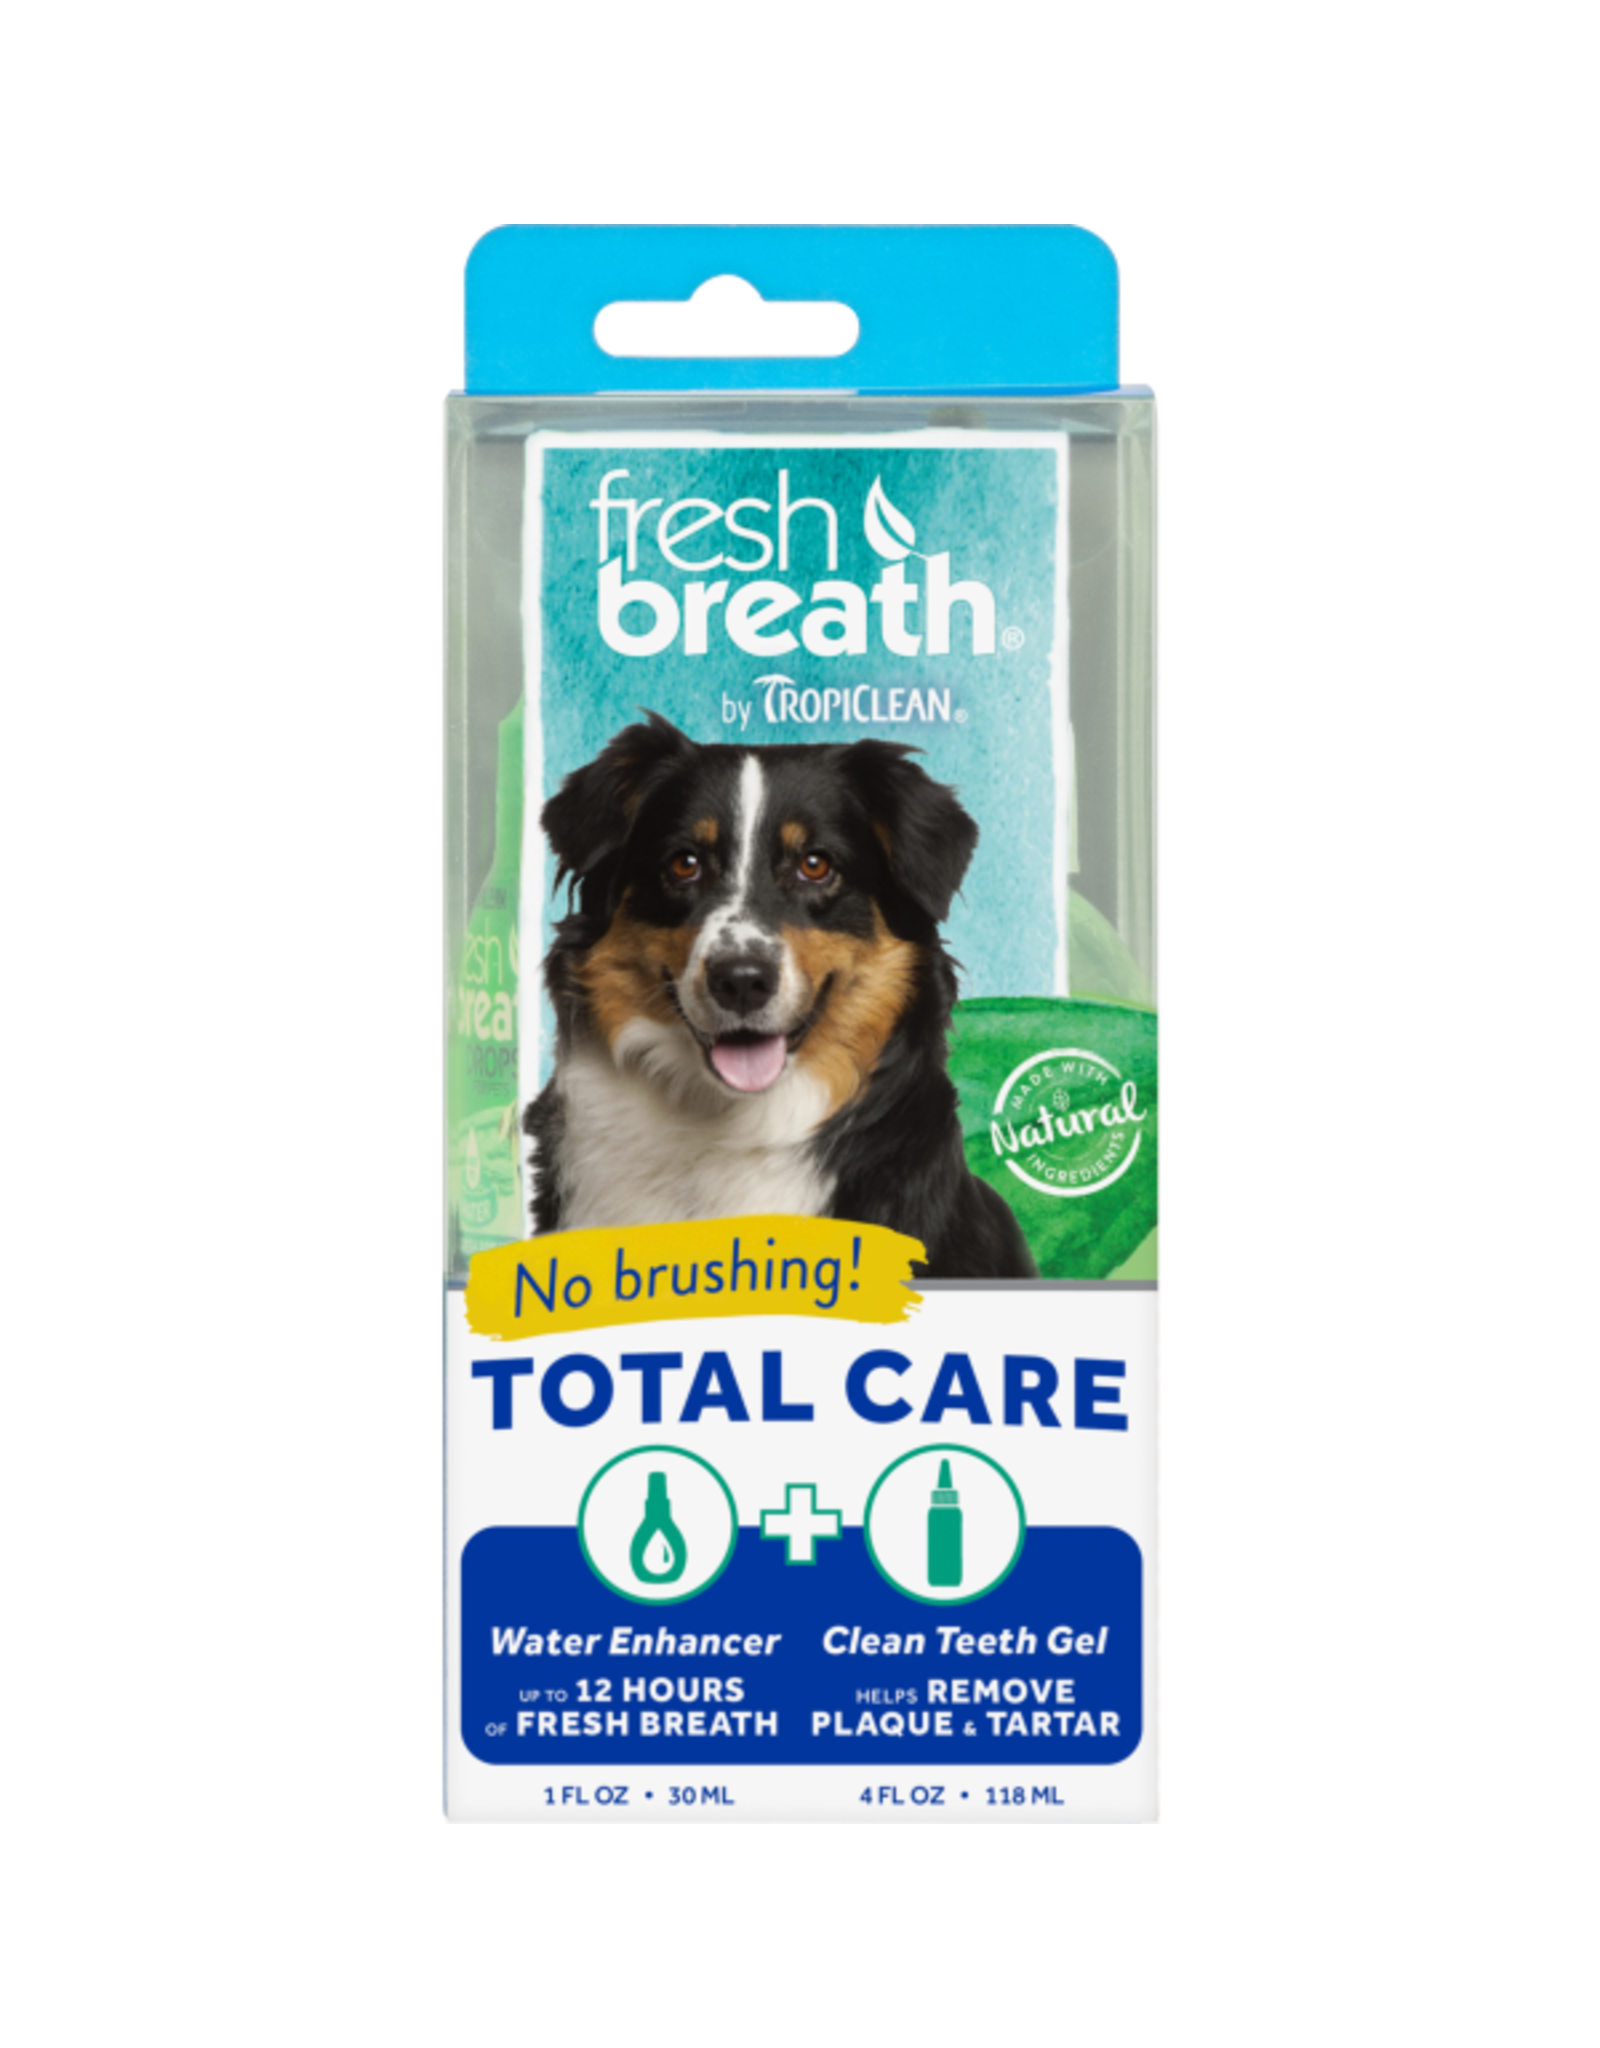 TropiClean Fresh Breath Total Care Brushing Kit